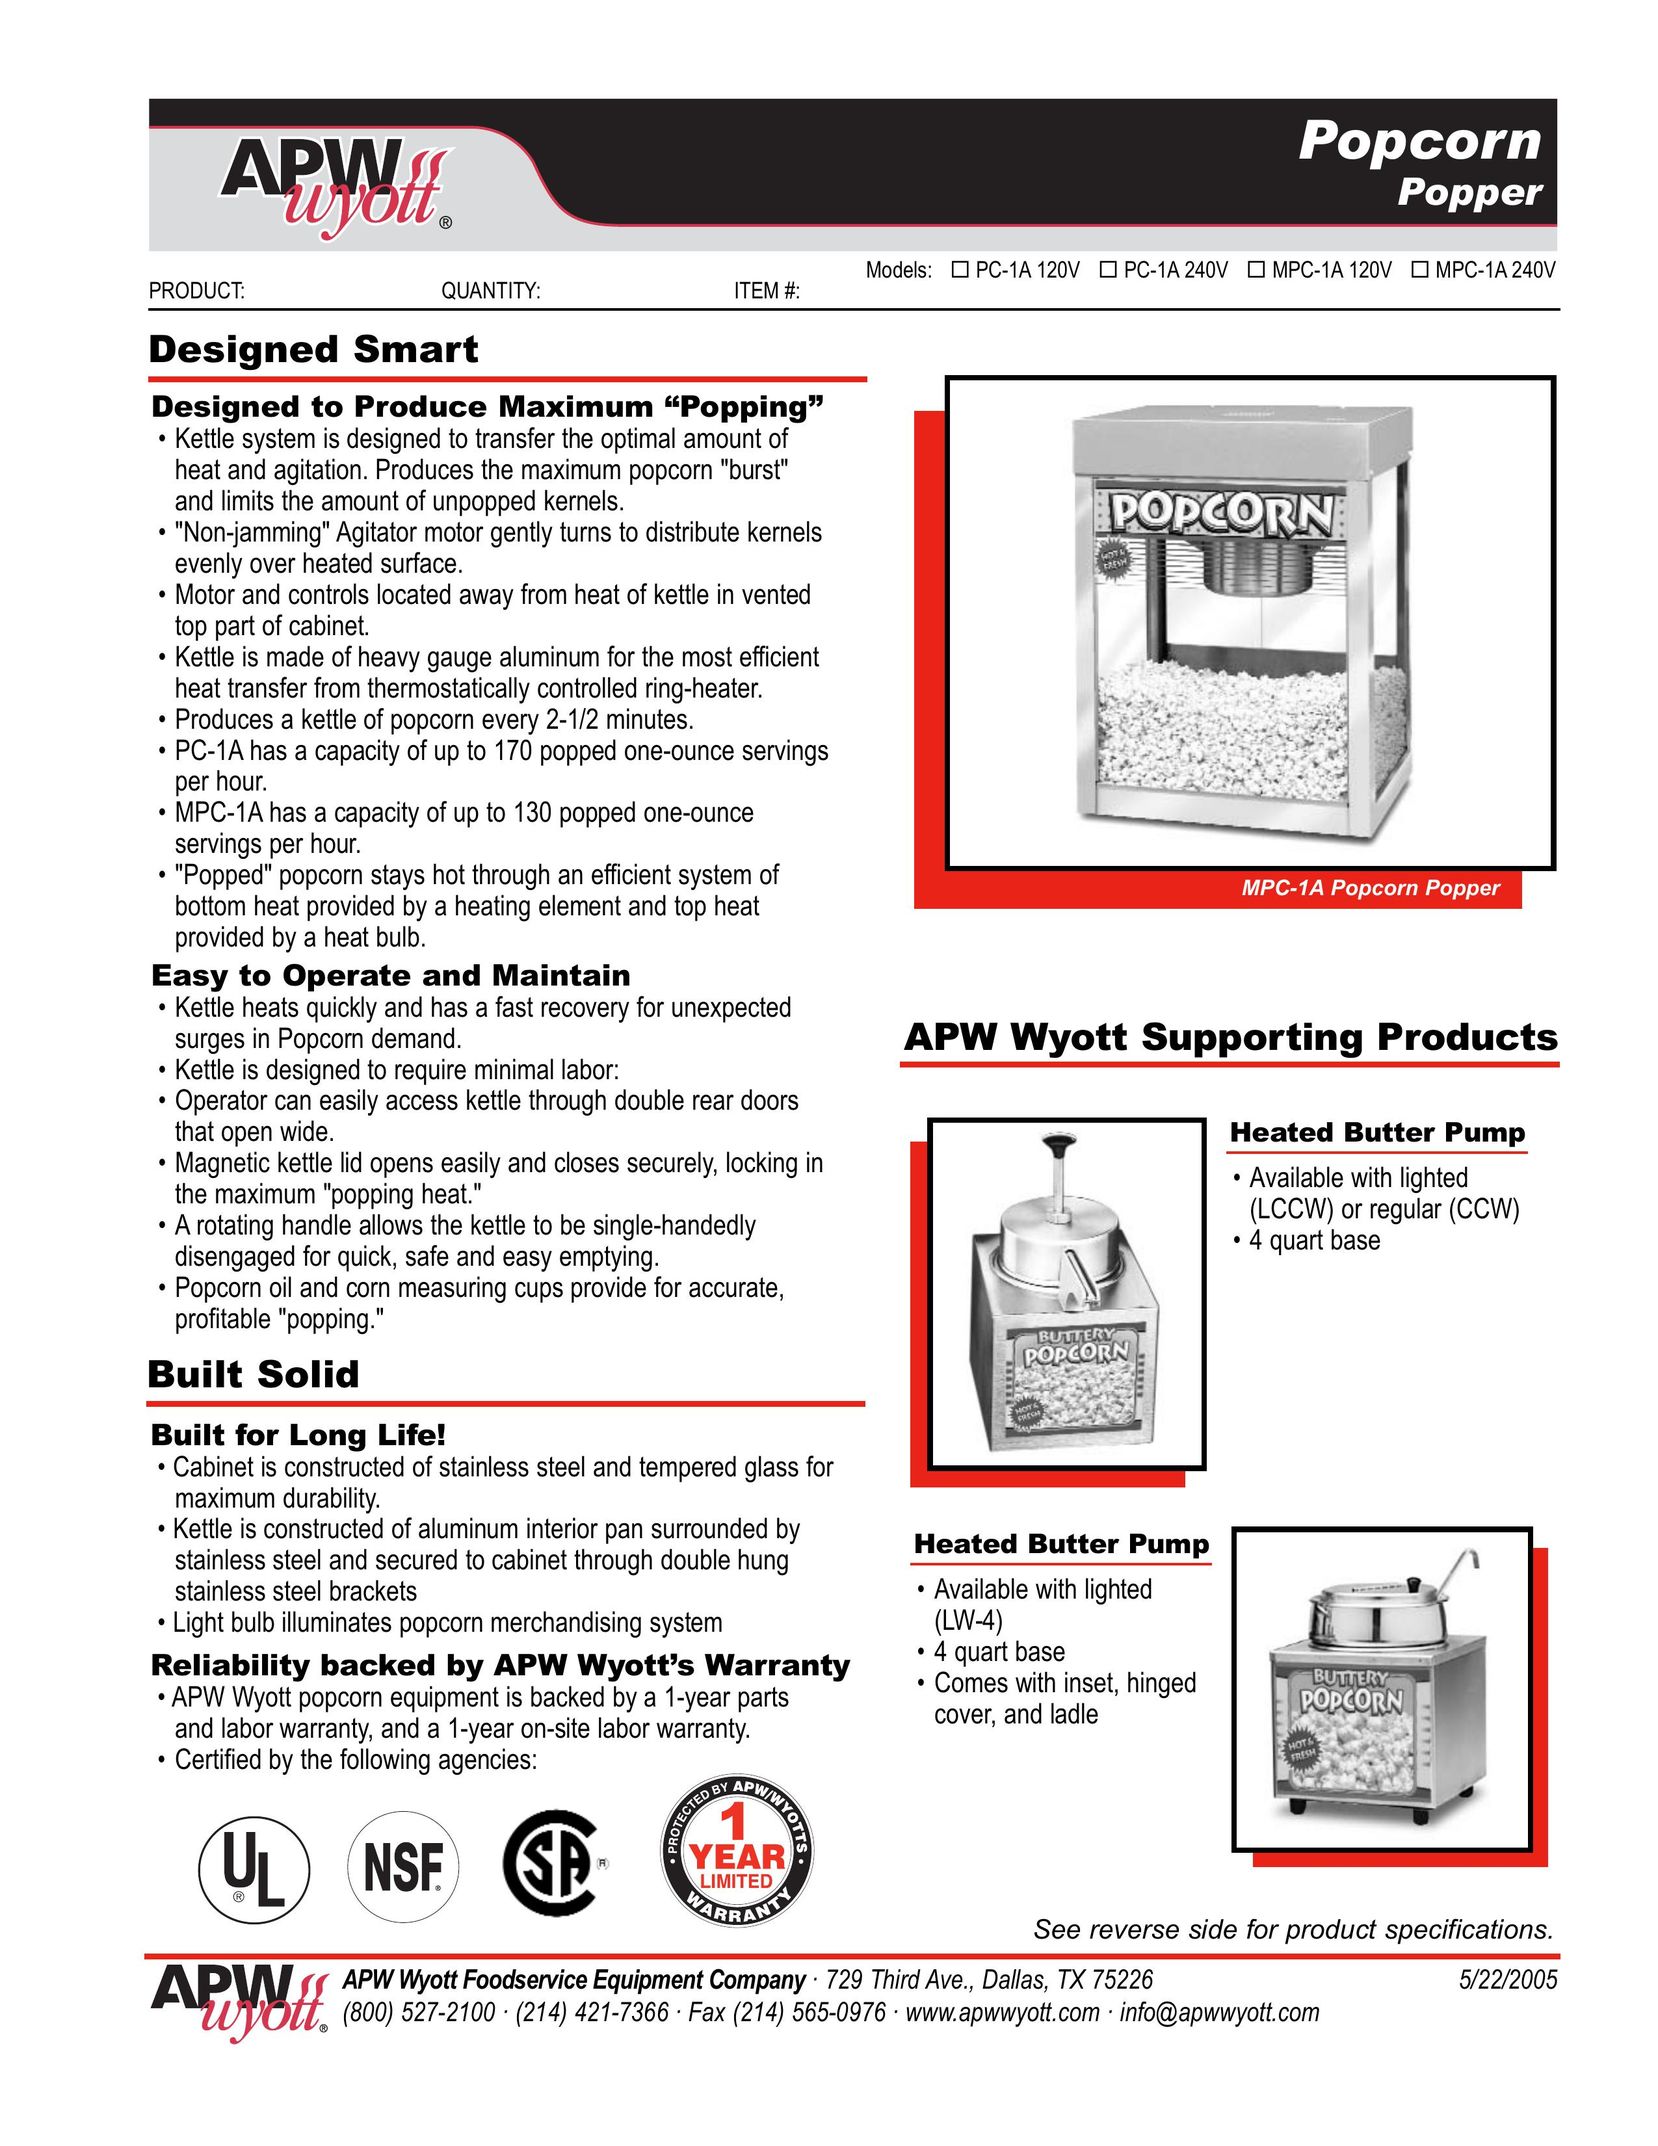 APW Wyott MPC-1A 120V Popcorn Poppers User Manual